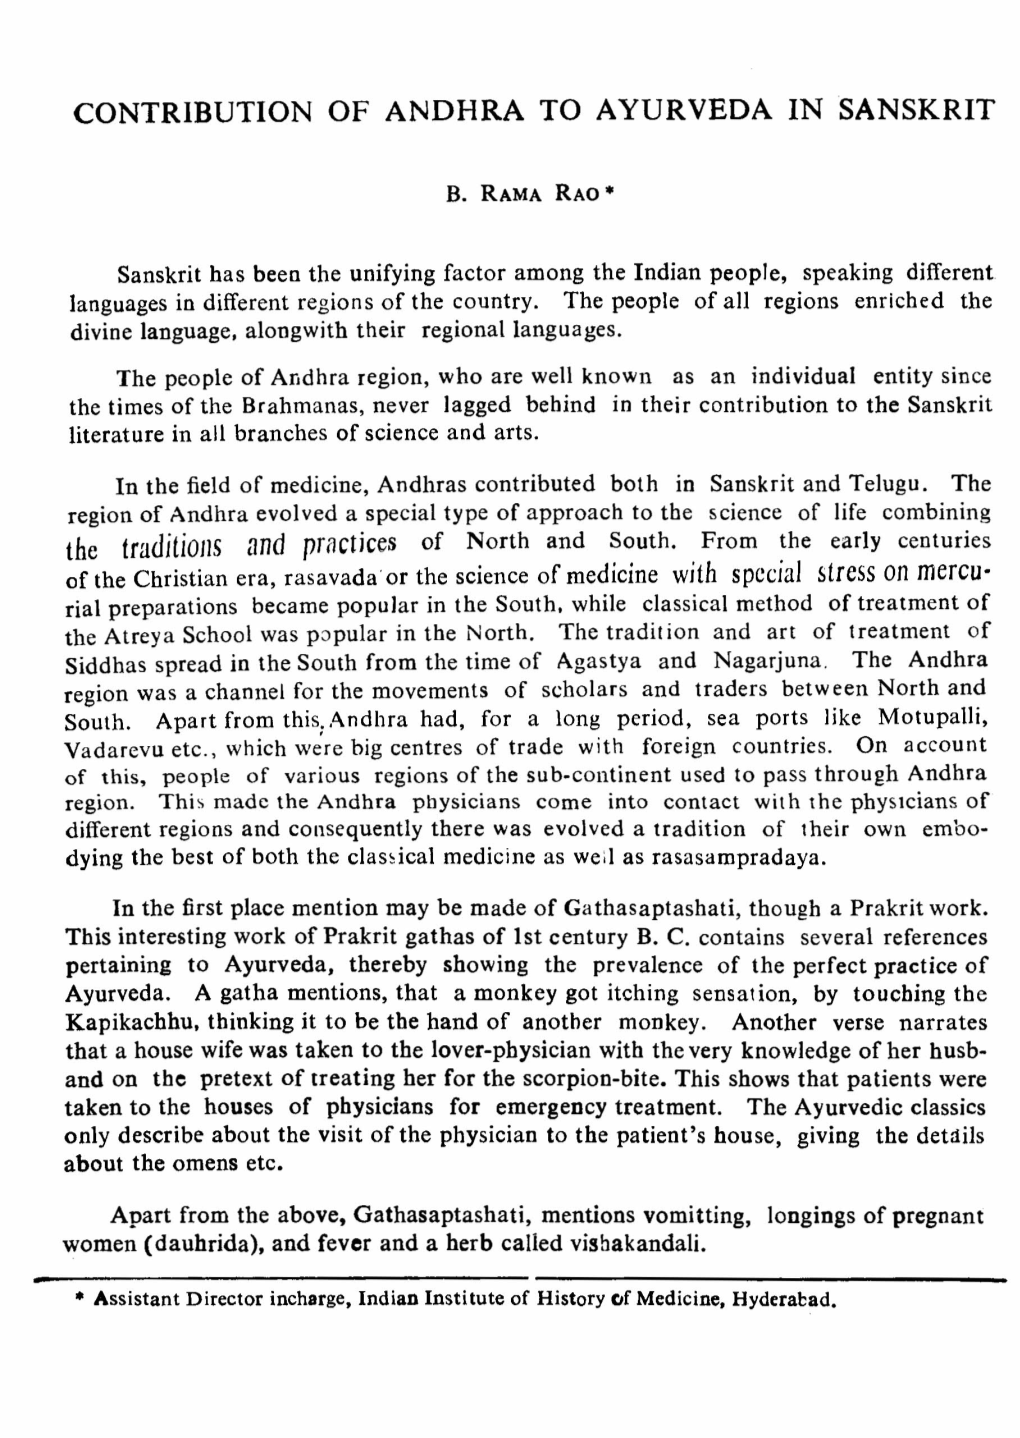 Contribution of Andhra to Ayurveda in Sanskrit